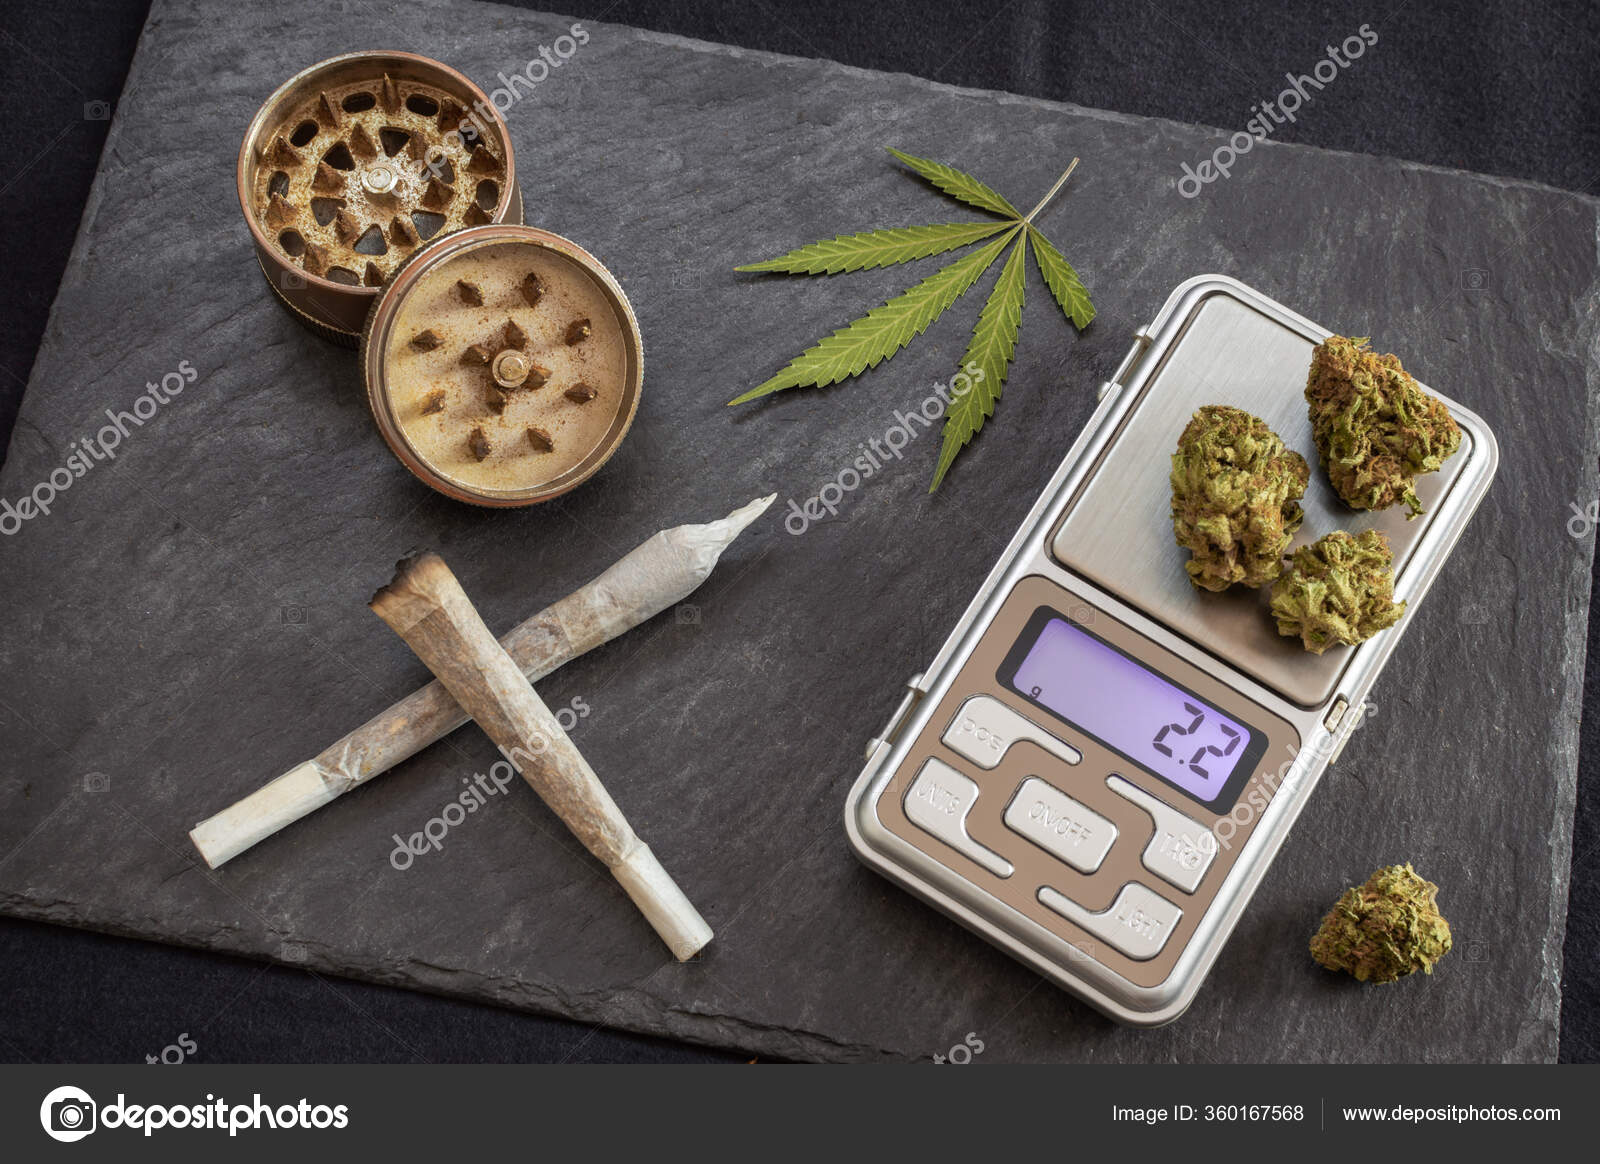 https://st3.depositphotos.com/31157000/36016/i/1600/depositphotos_360167568-stock-photo-marijuana-joints-ready-smoke-digital.jpg